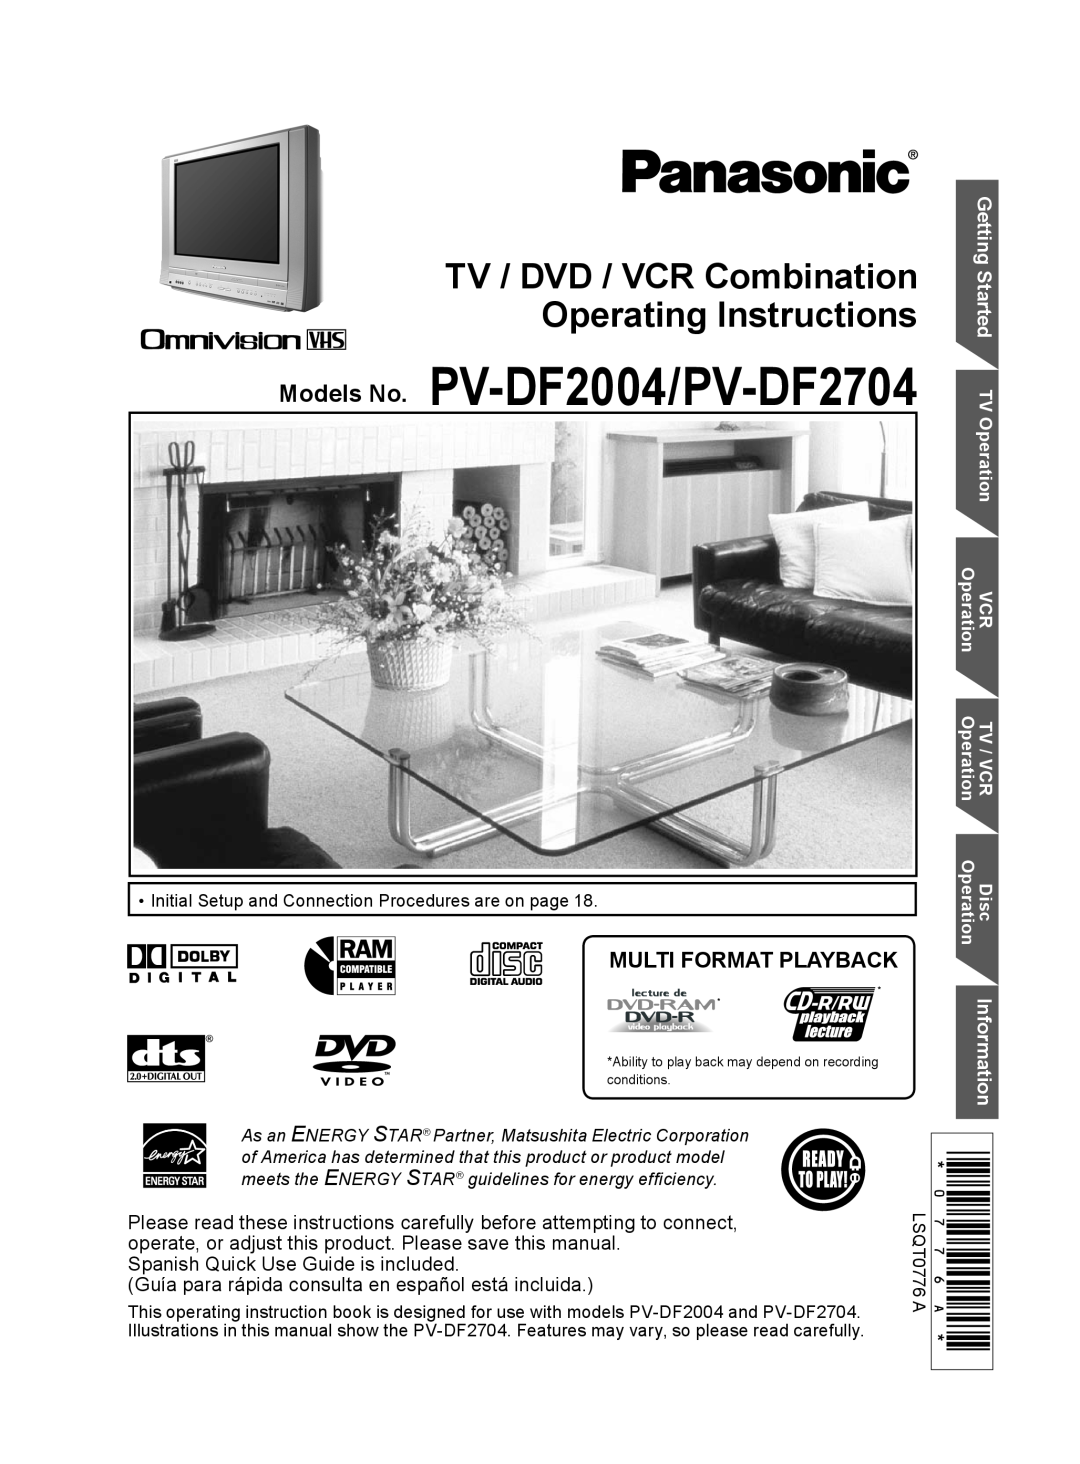 Panasonic PV DF2704, PV DF2004 manual Models No. PV-DF2004/PV-DF2704, TV / DVD / VCR Combination Operating Instructions 